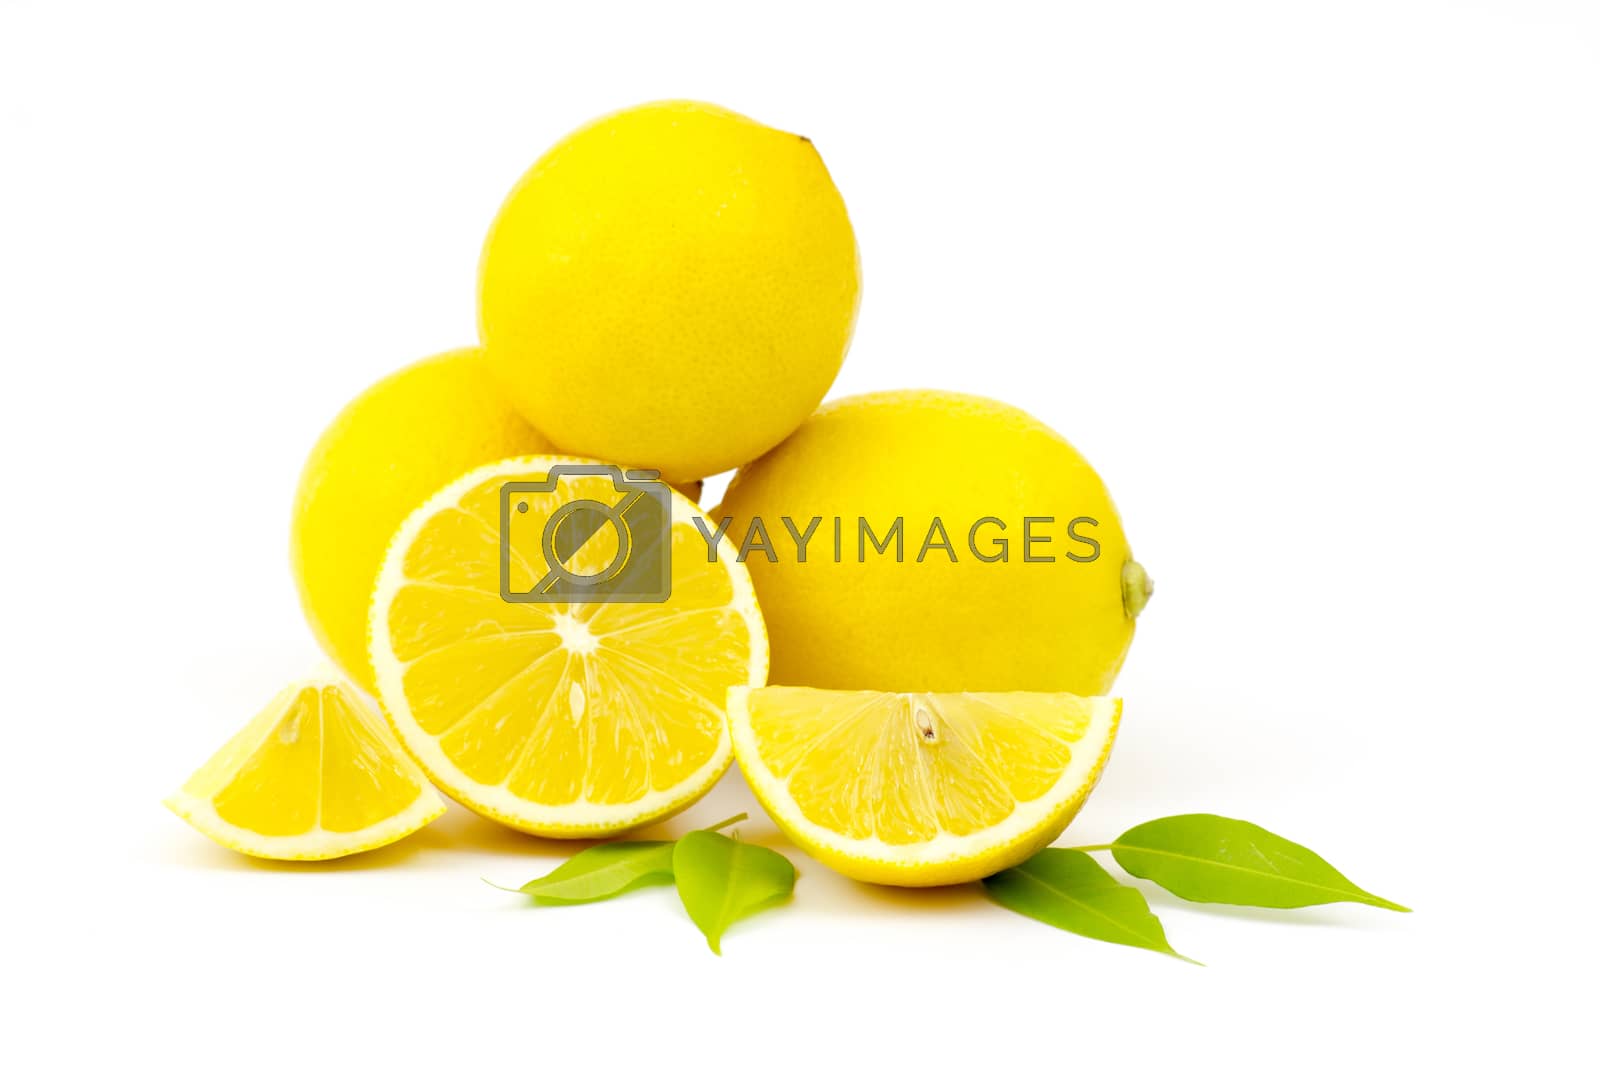 Royalty free image of fresh lemons by miradrozdowski